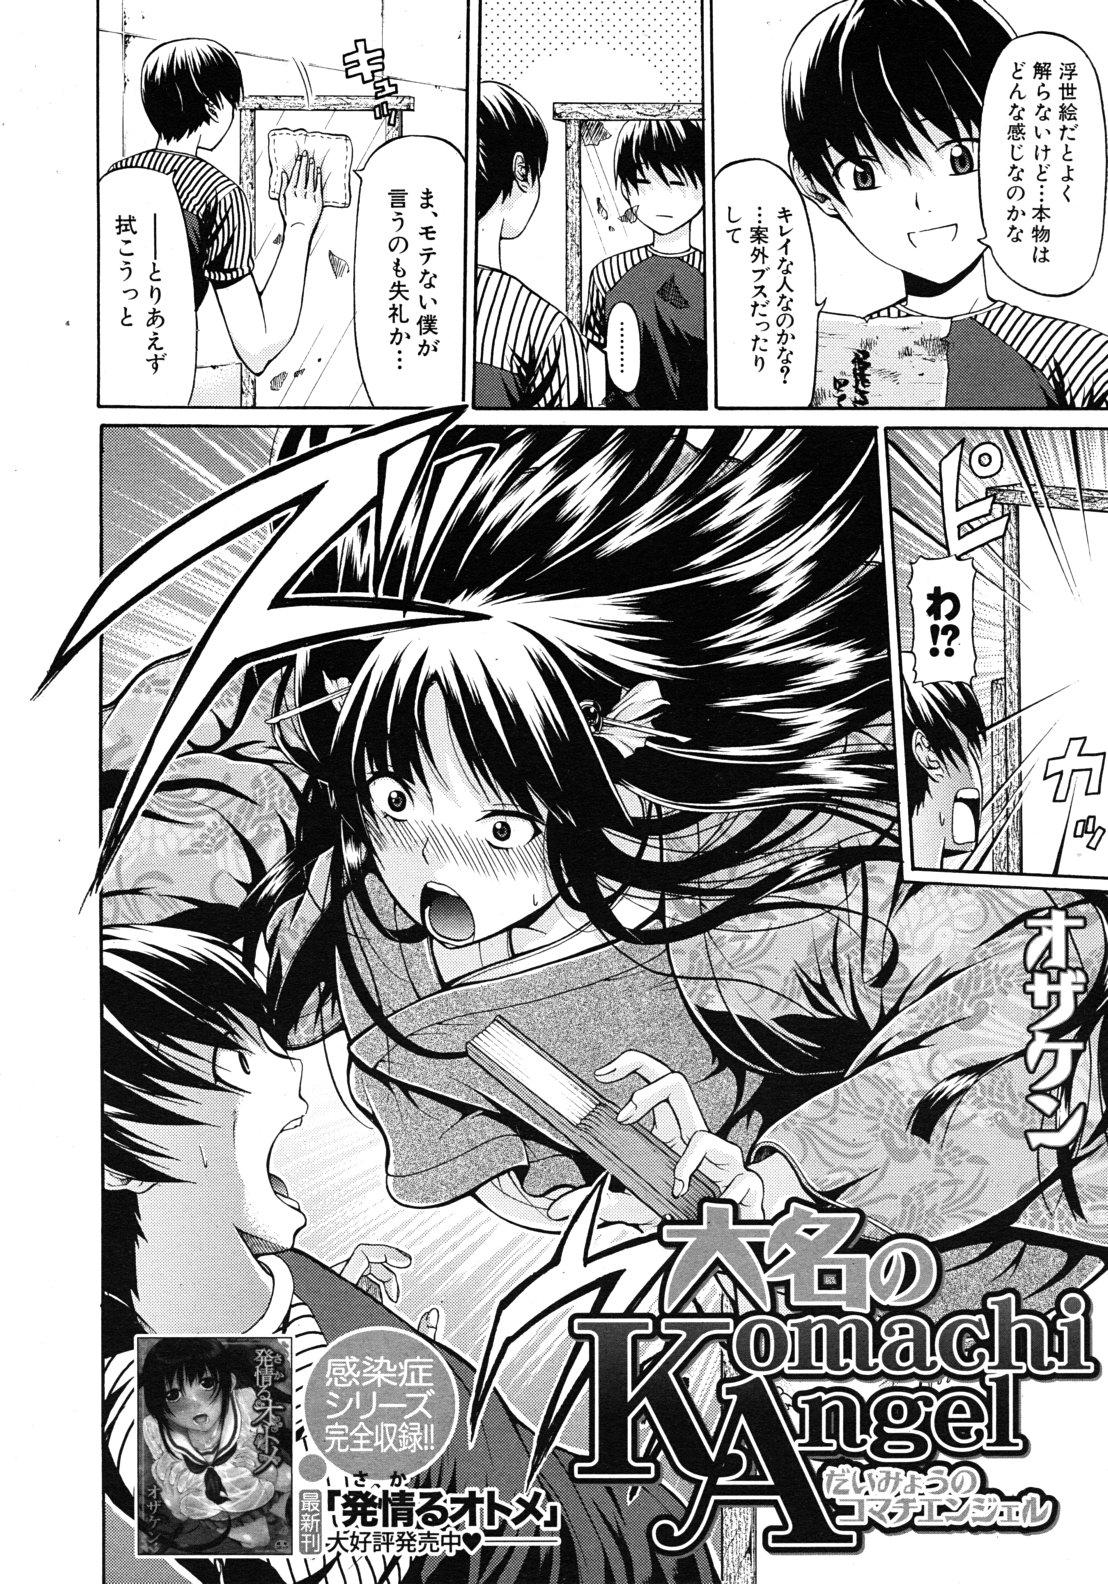 Girlfriends Daimyou no Komachi Angel Solo Female - Page 2